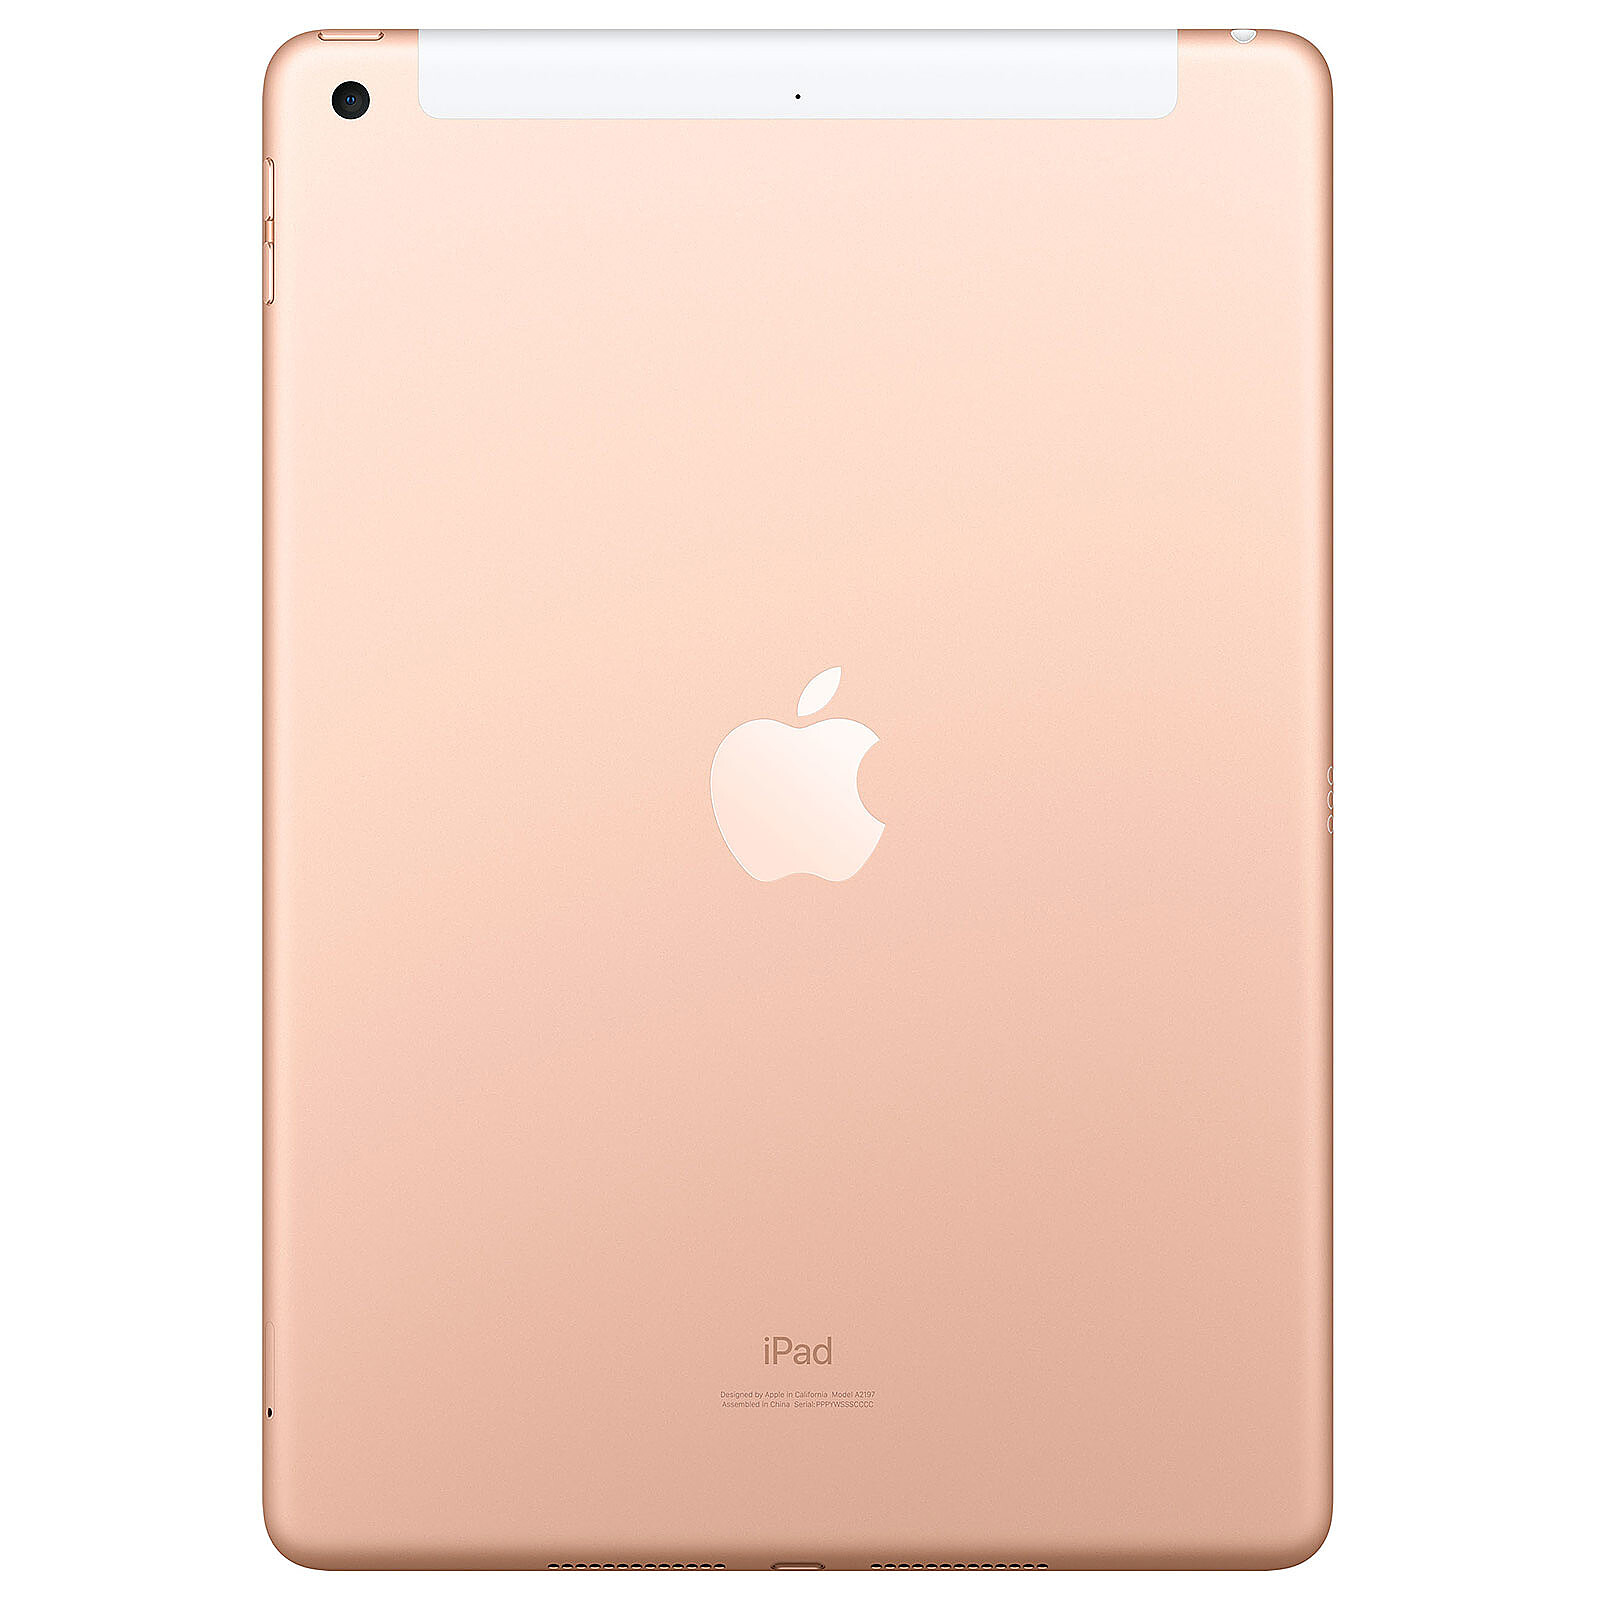 Apple iPad (Gen 8) Wi-Fi Cellular 32 GB Gold - Tablet computer 